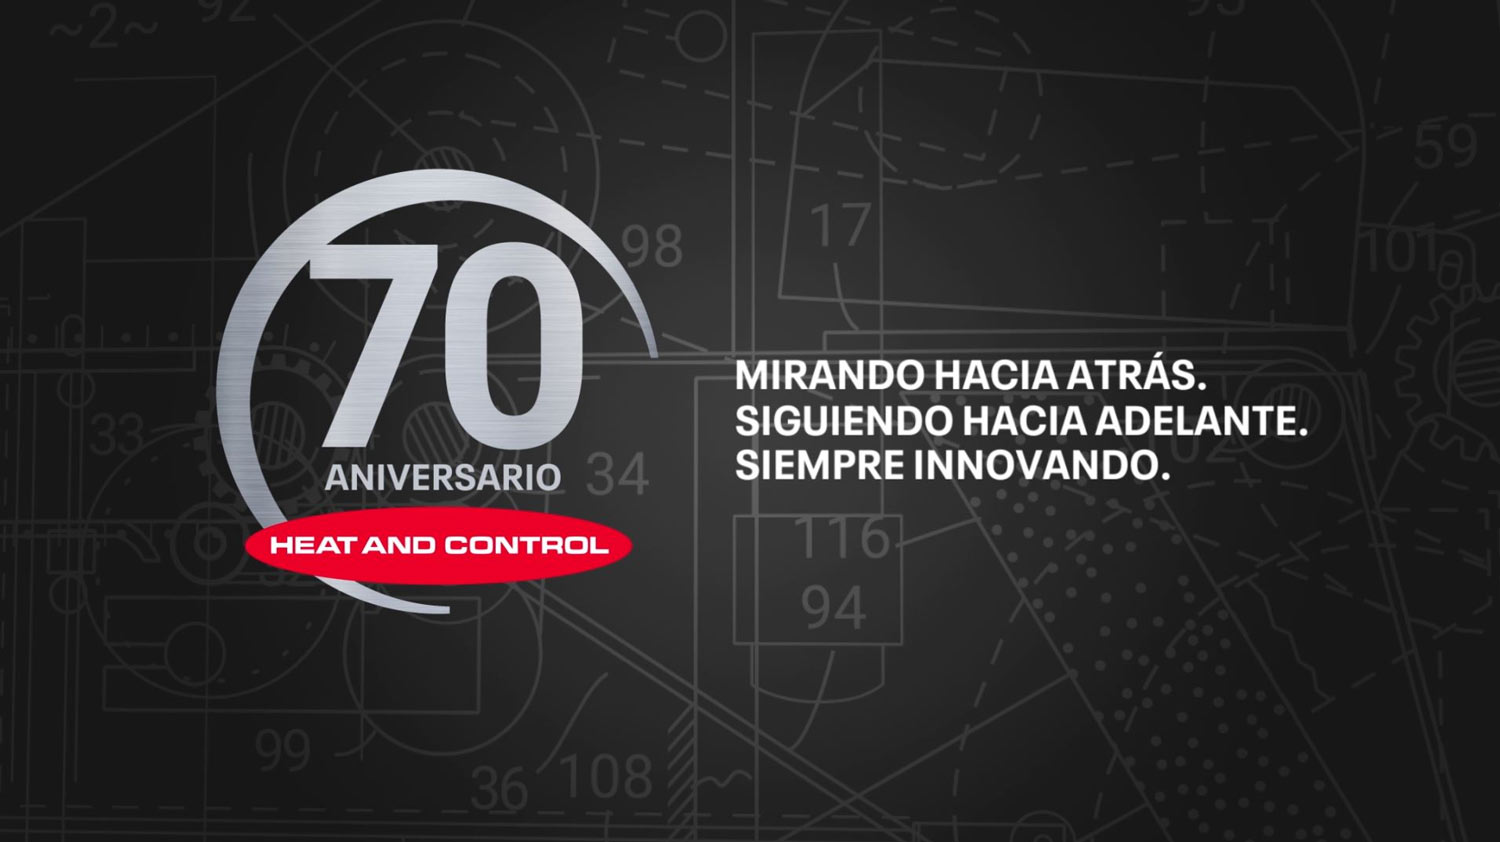 Heat and Control 70 Year Anniversary Video - Spanish